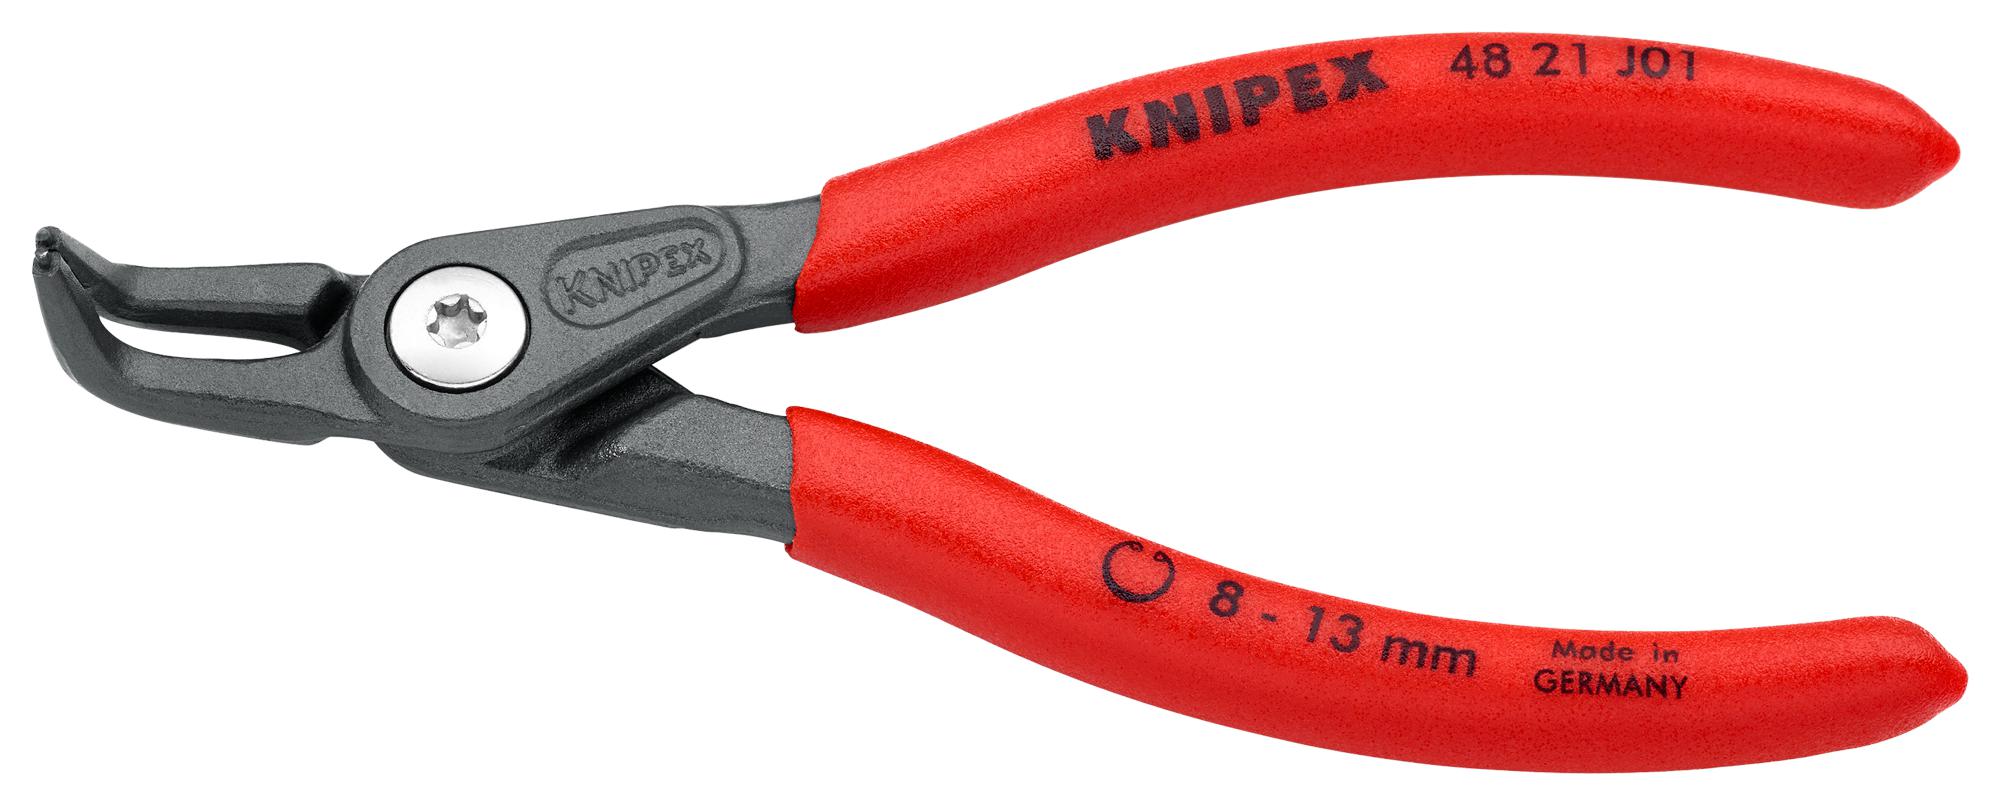 Knipex 48 21 J01 Circlip Plier, Int, Bent